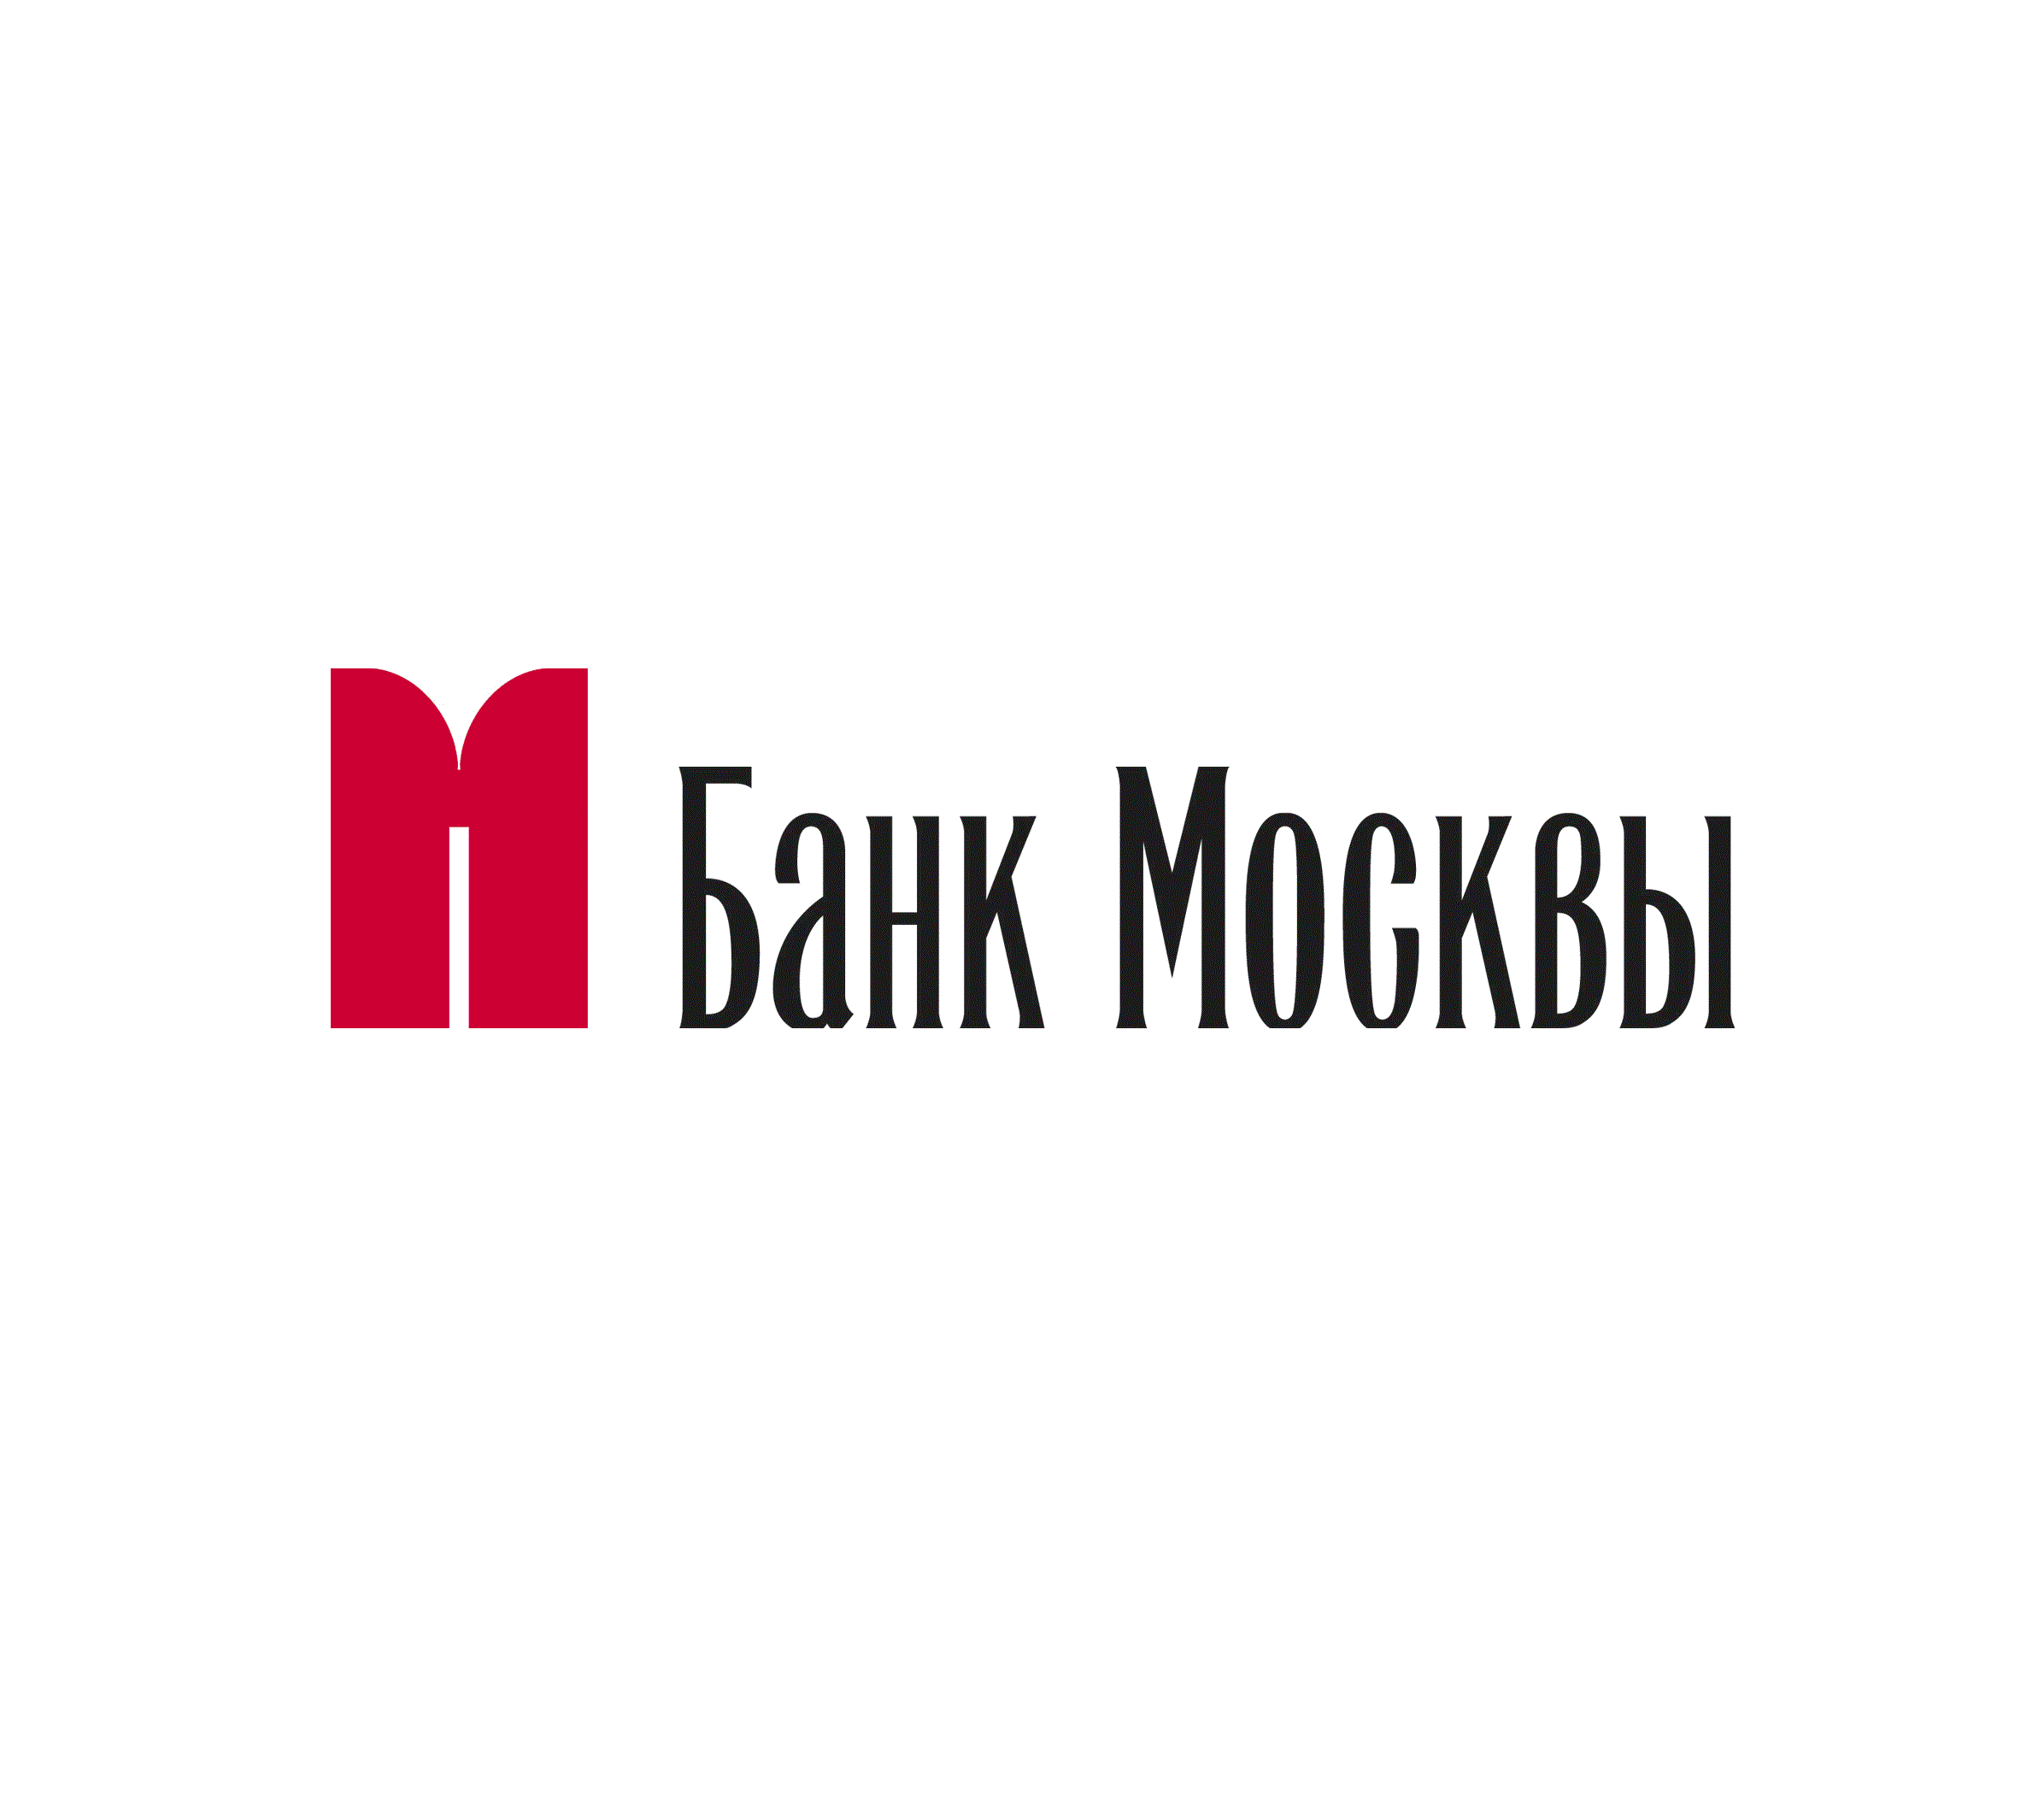 Банк москвы лицензий. Банк Москвы. Банк Москвы лого. Эмблемы банков Москвы. Московский банк логотип.